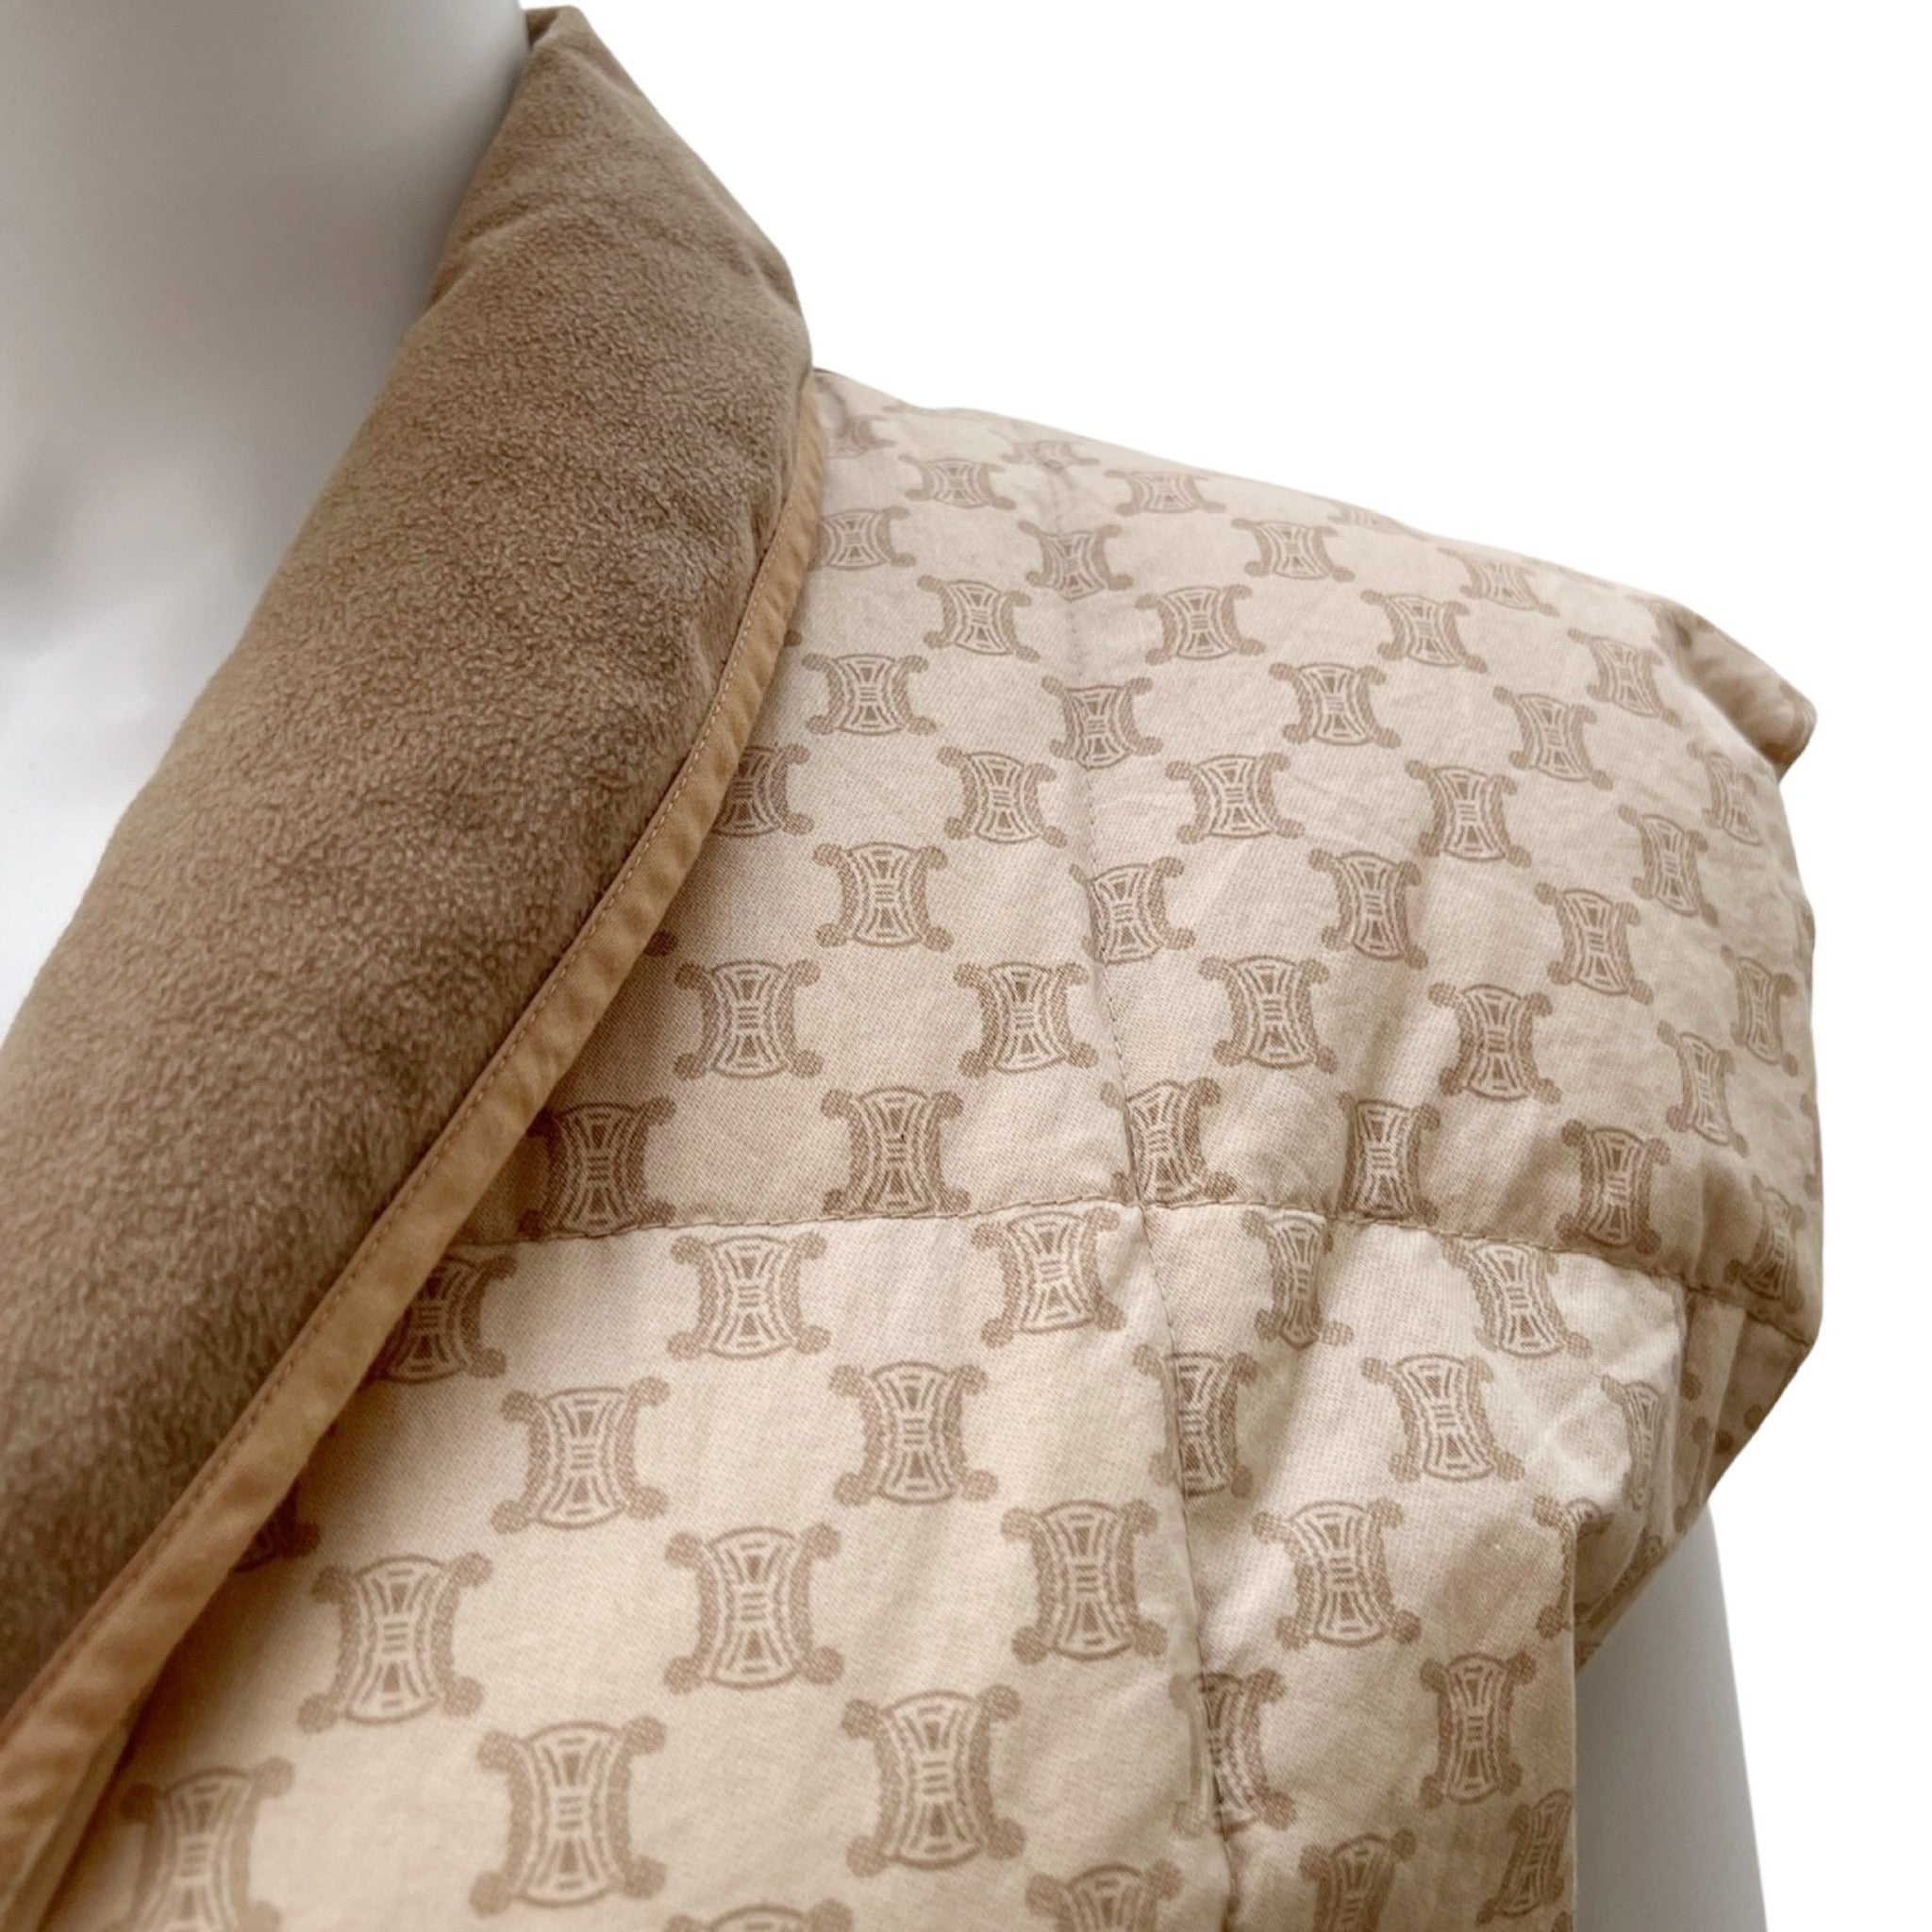 Louis Vuitton Throw Pillows for Sale - Pixels